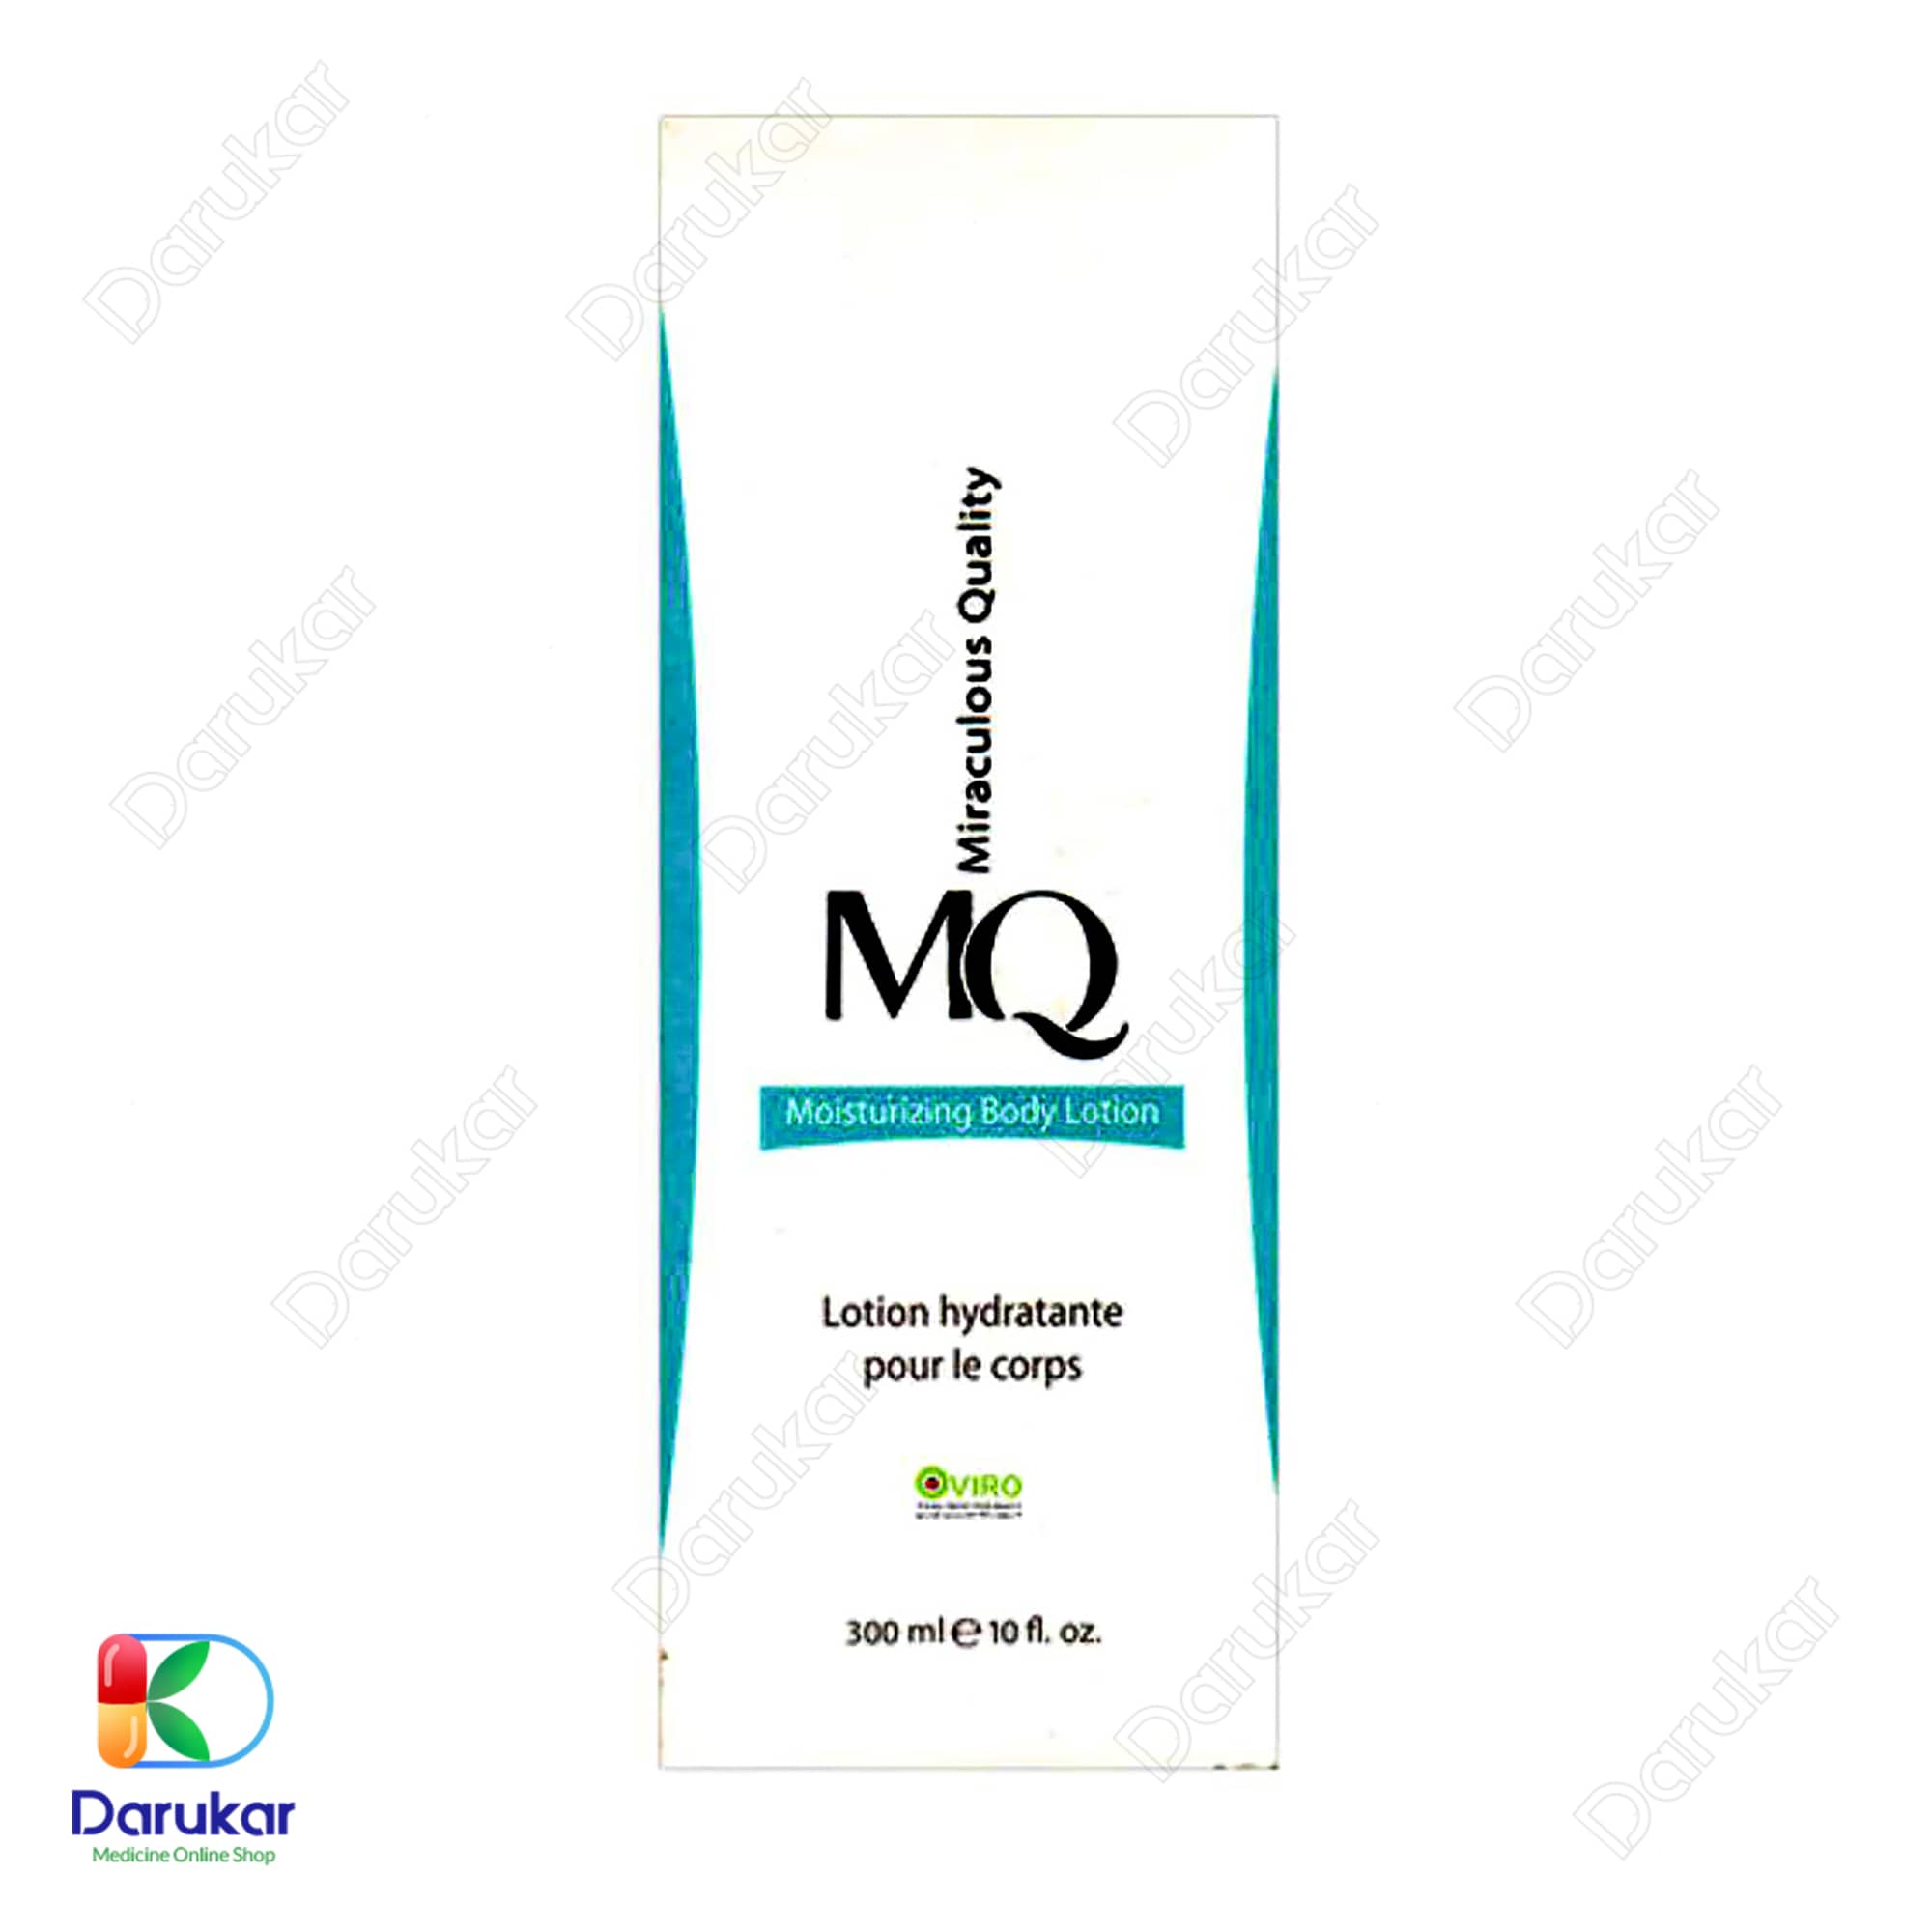 MQ Moisturizing Body Lotion 300 ml 2